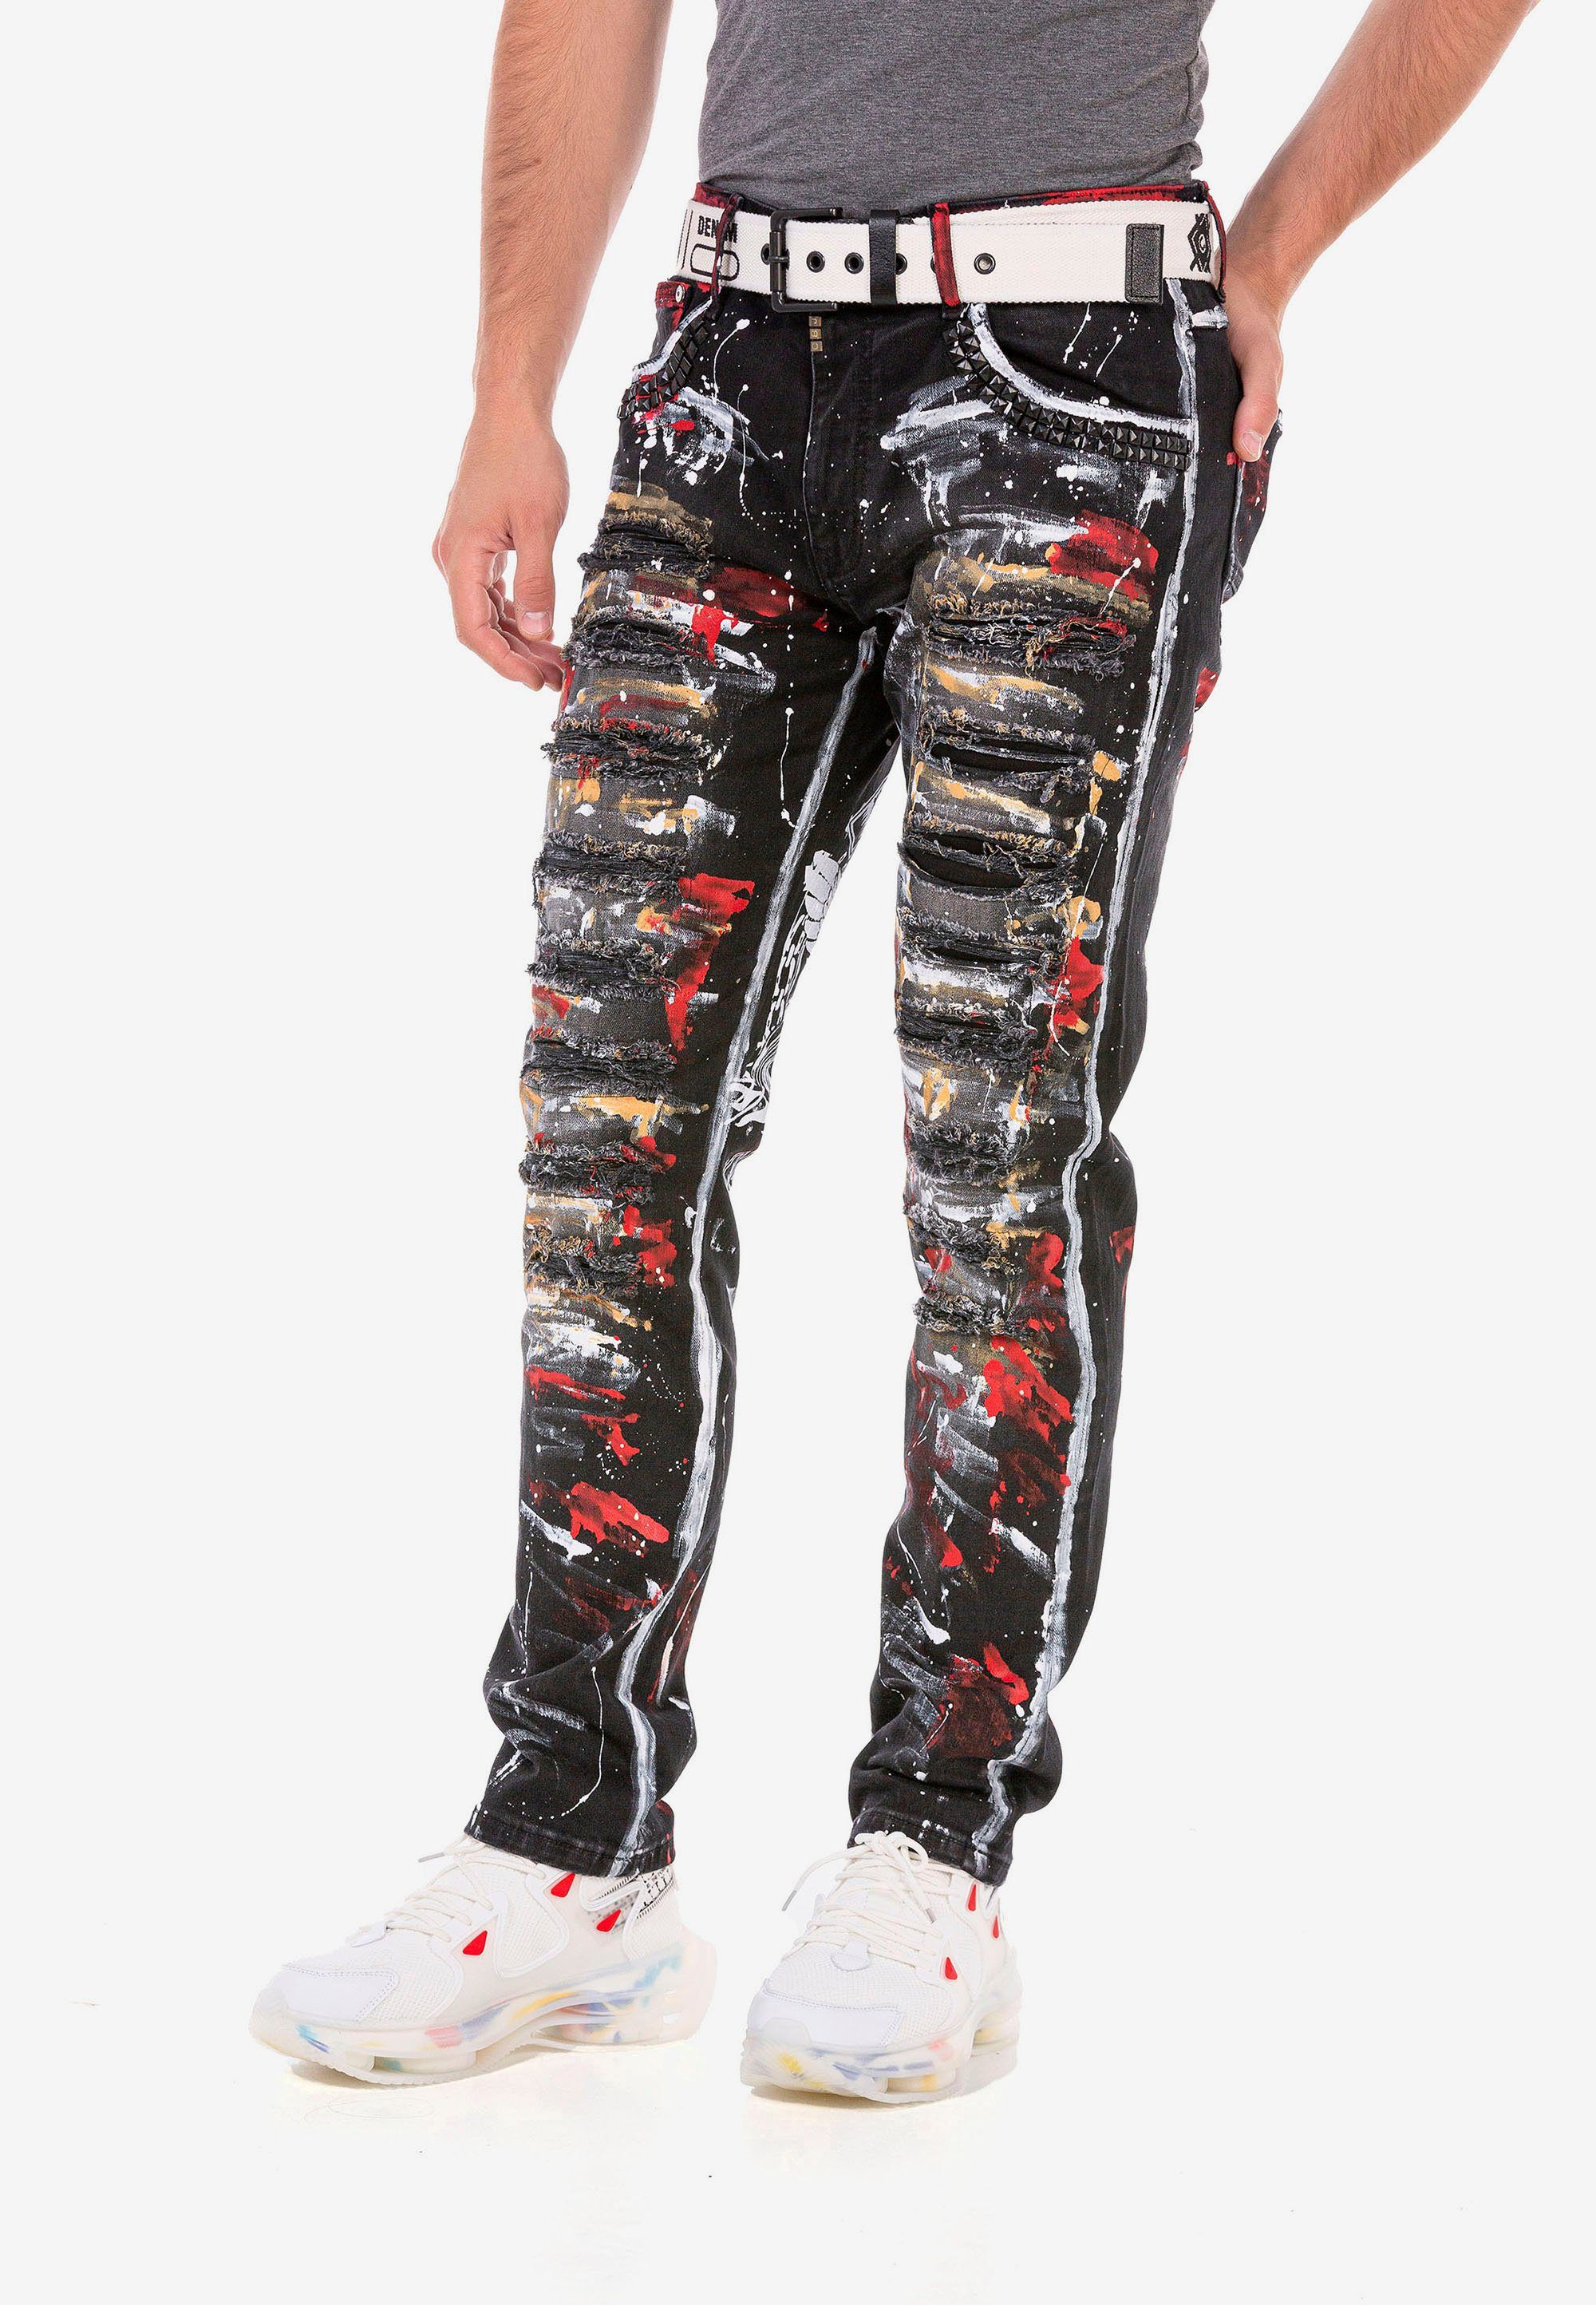 Cipo & Baxx Streetstyle Straight-Jeans im coolen